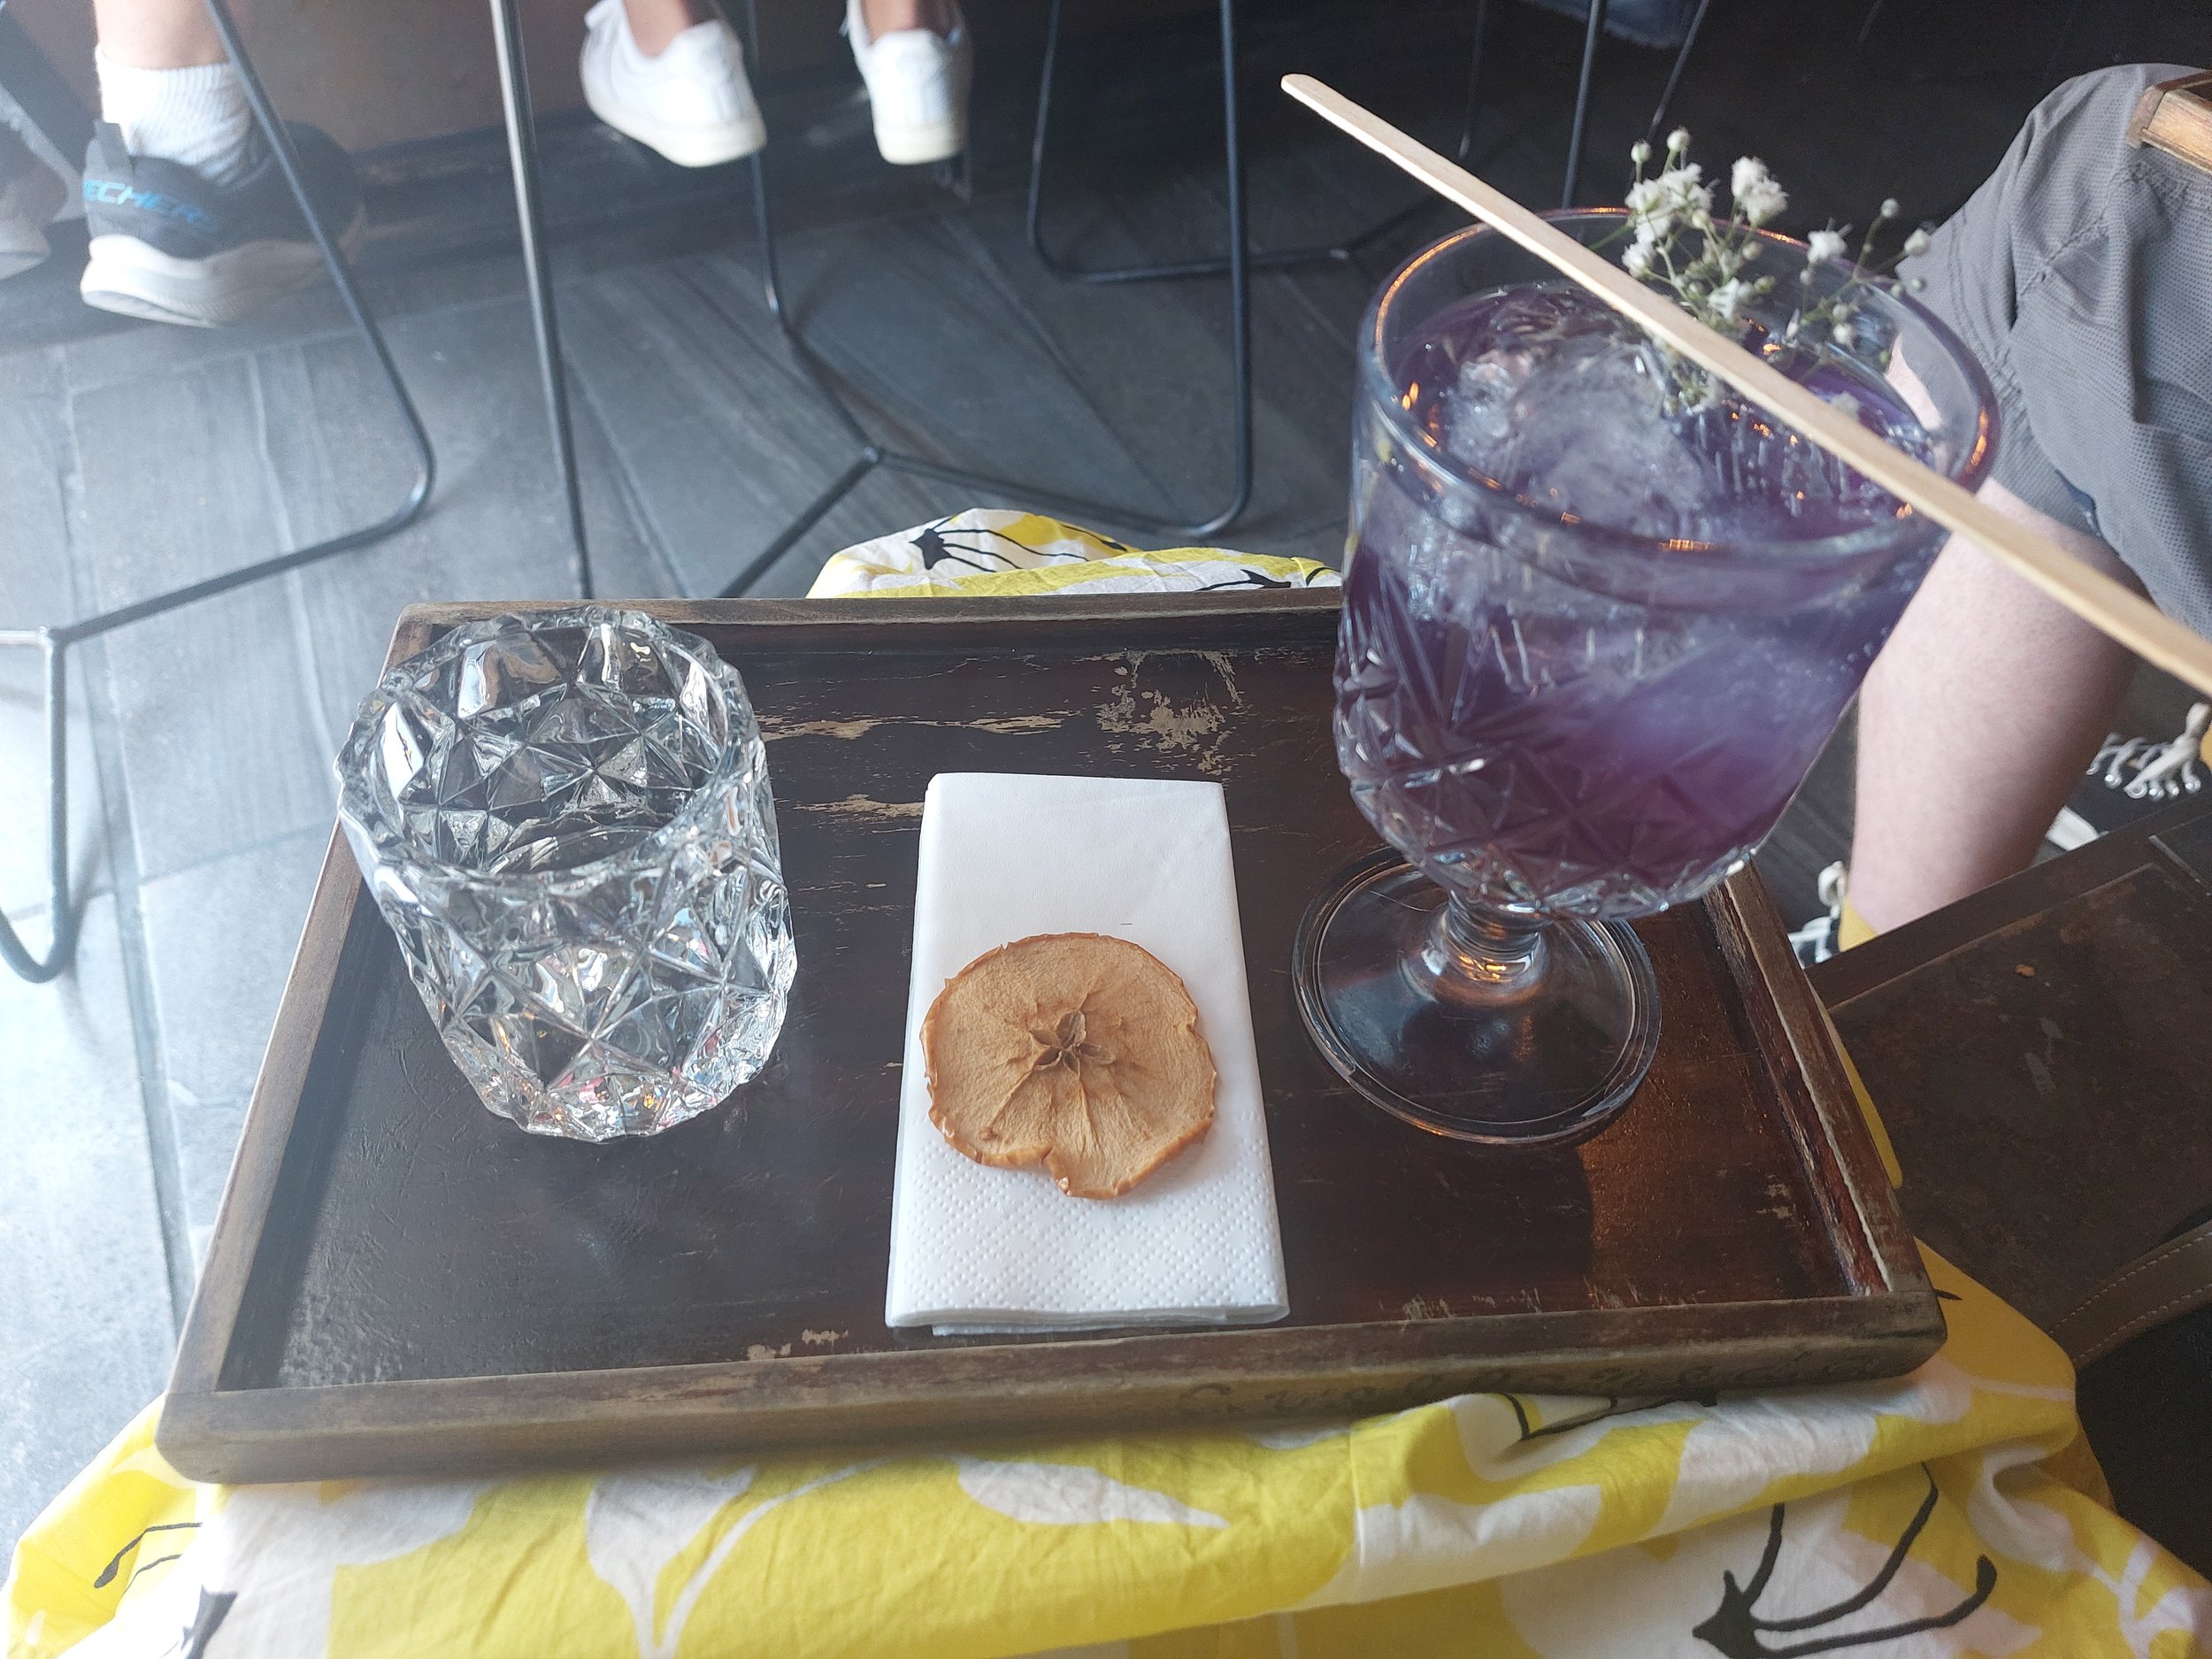 That lavender drink